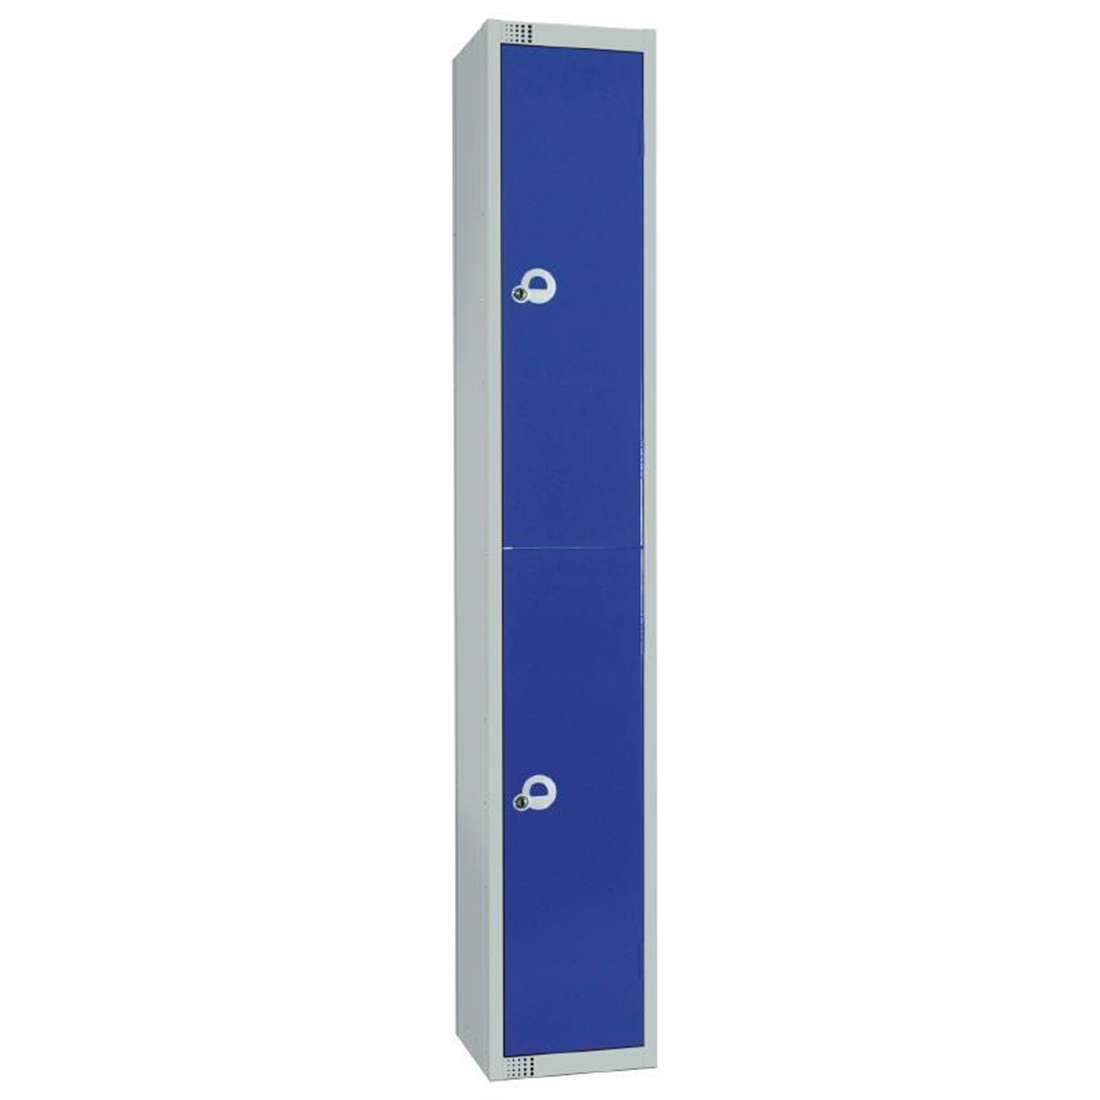 Elite Double Door Electronic Combination Locker with Sloping Top Blue